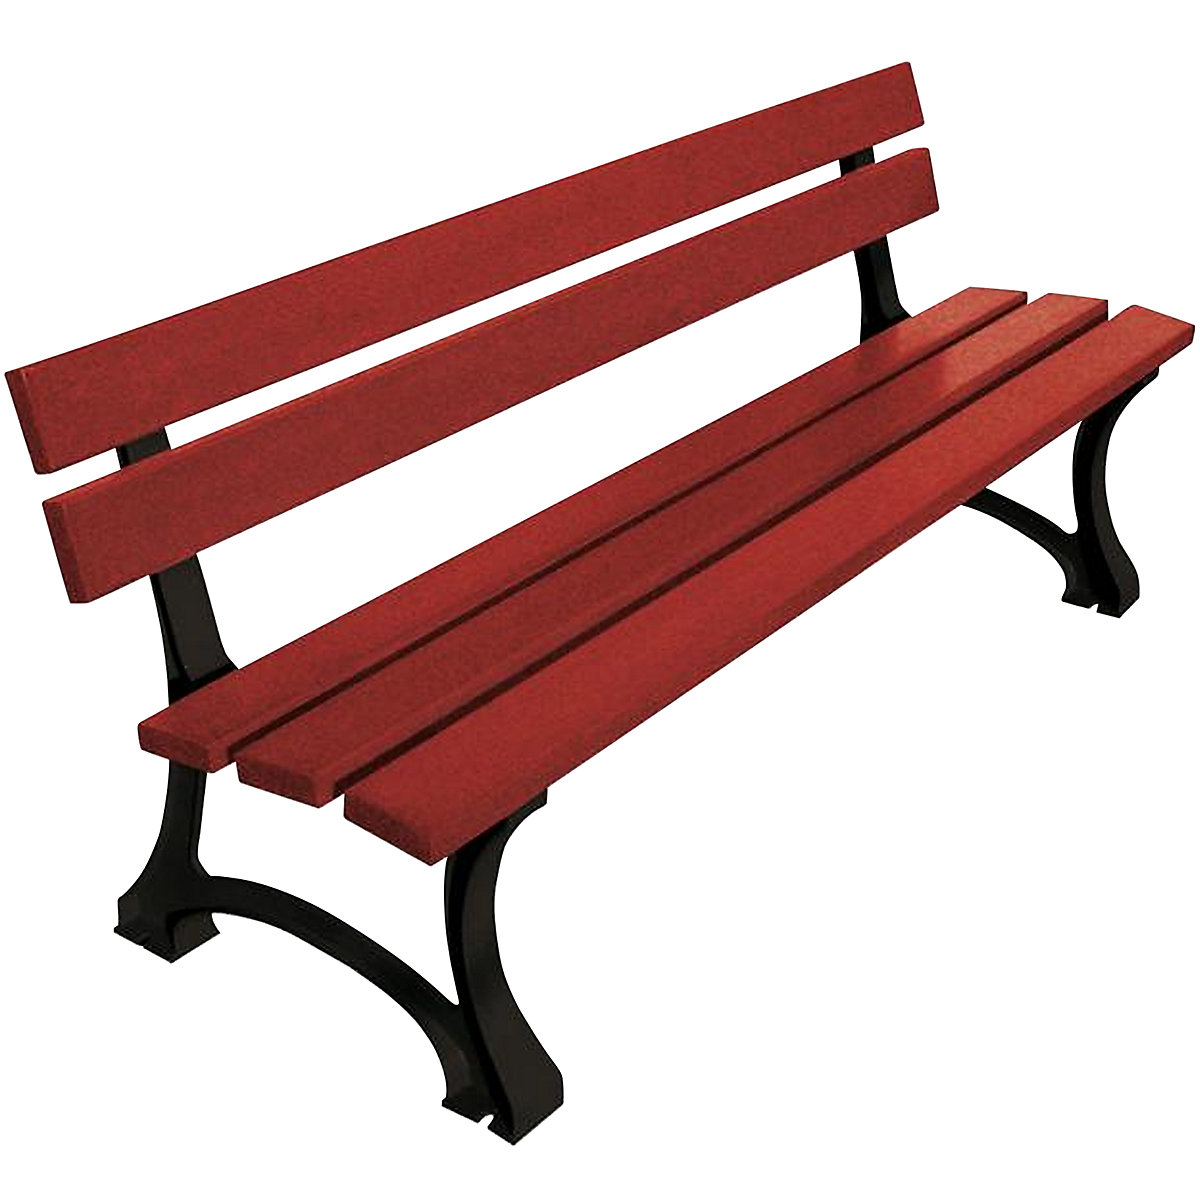 MORA park bench - PROCITY